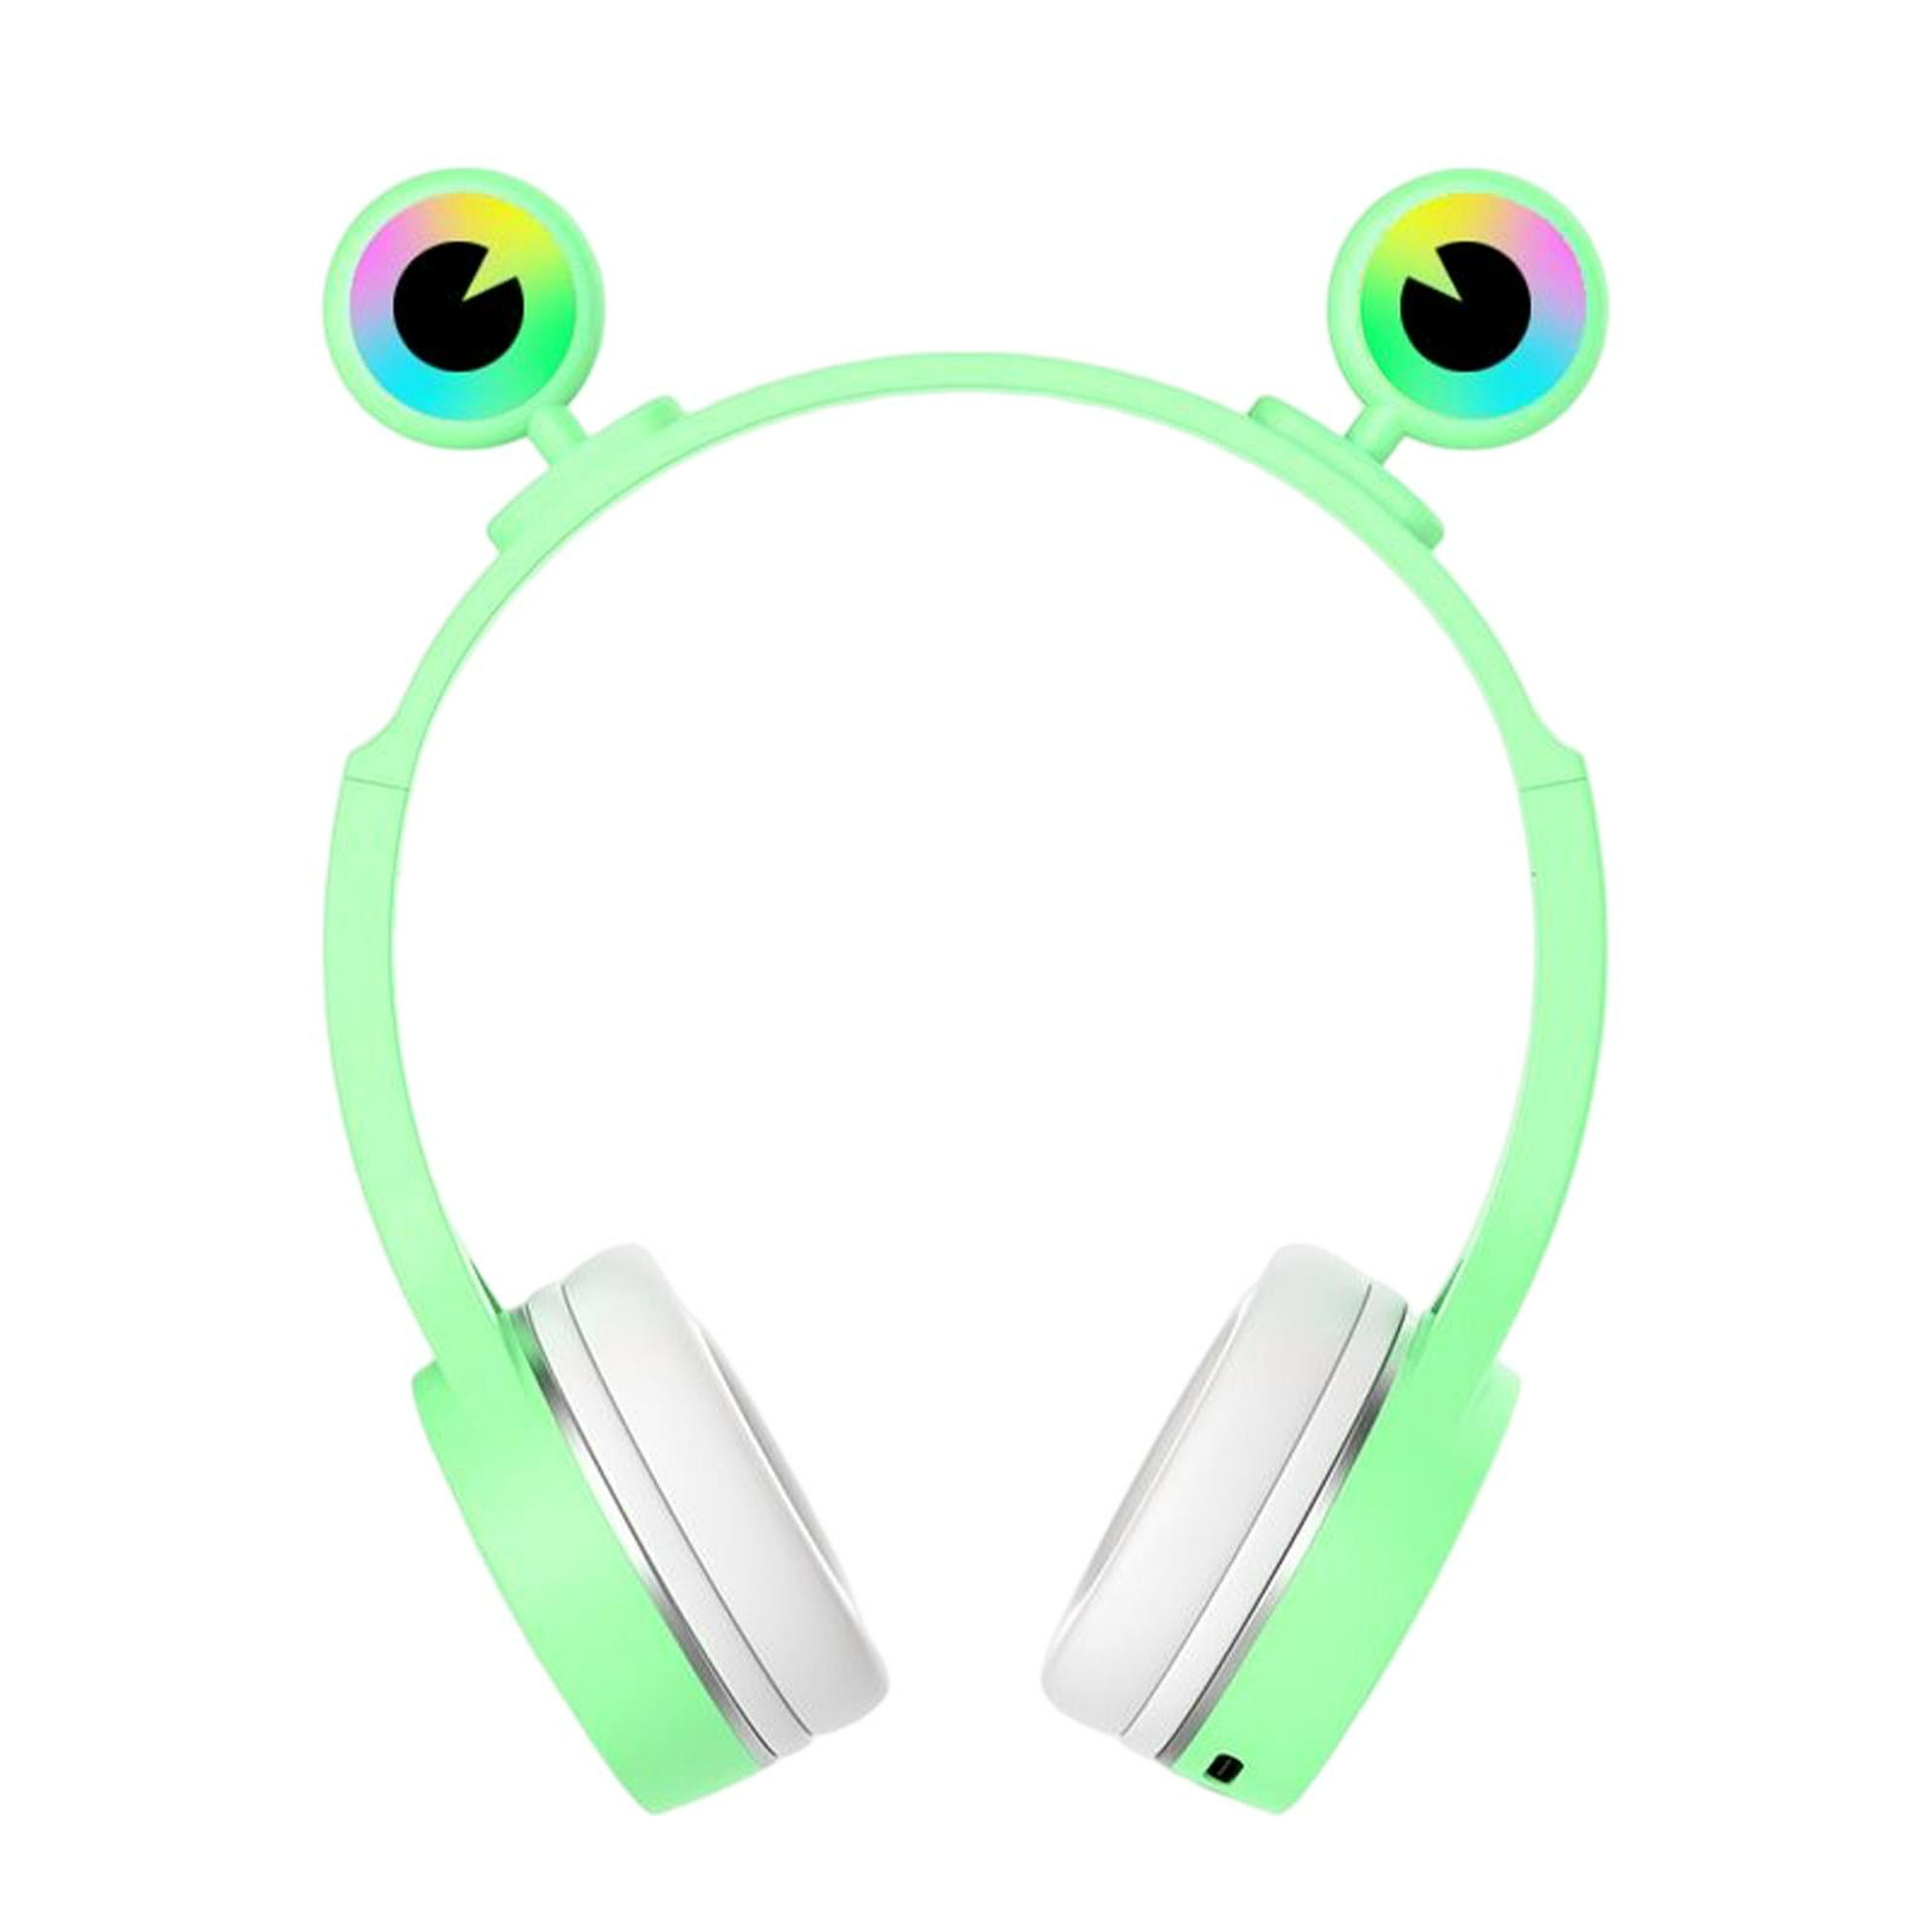 Auriculares USB C Música Estéreo Micrófono incorporado Ajustable RGB Verde